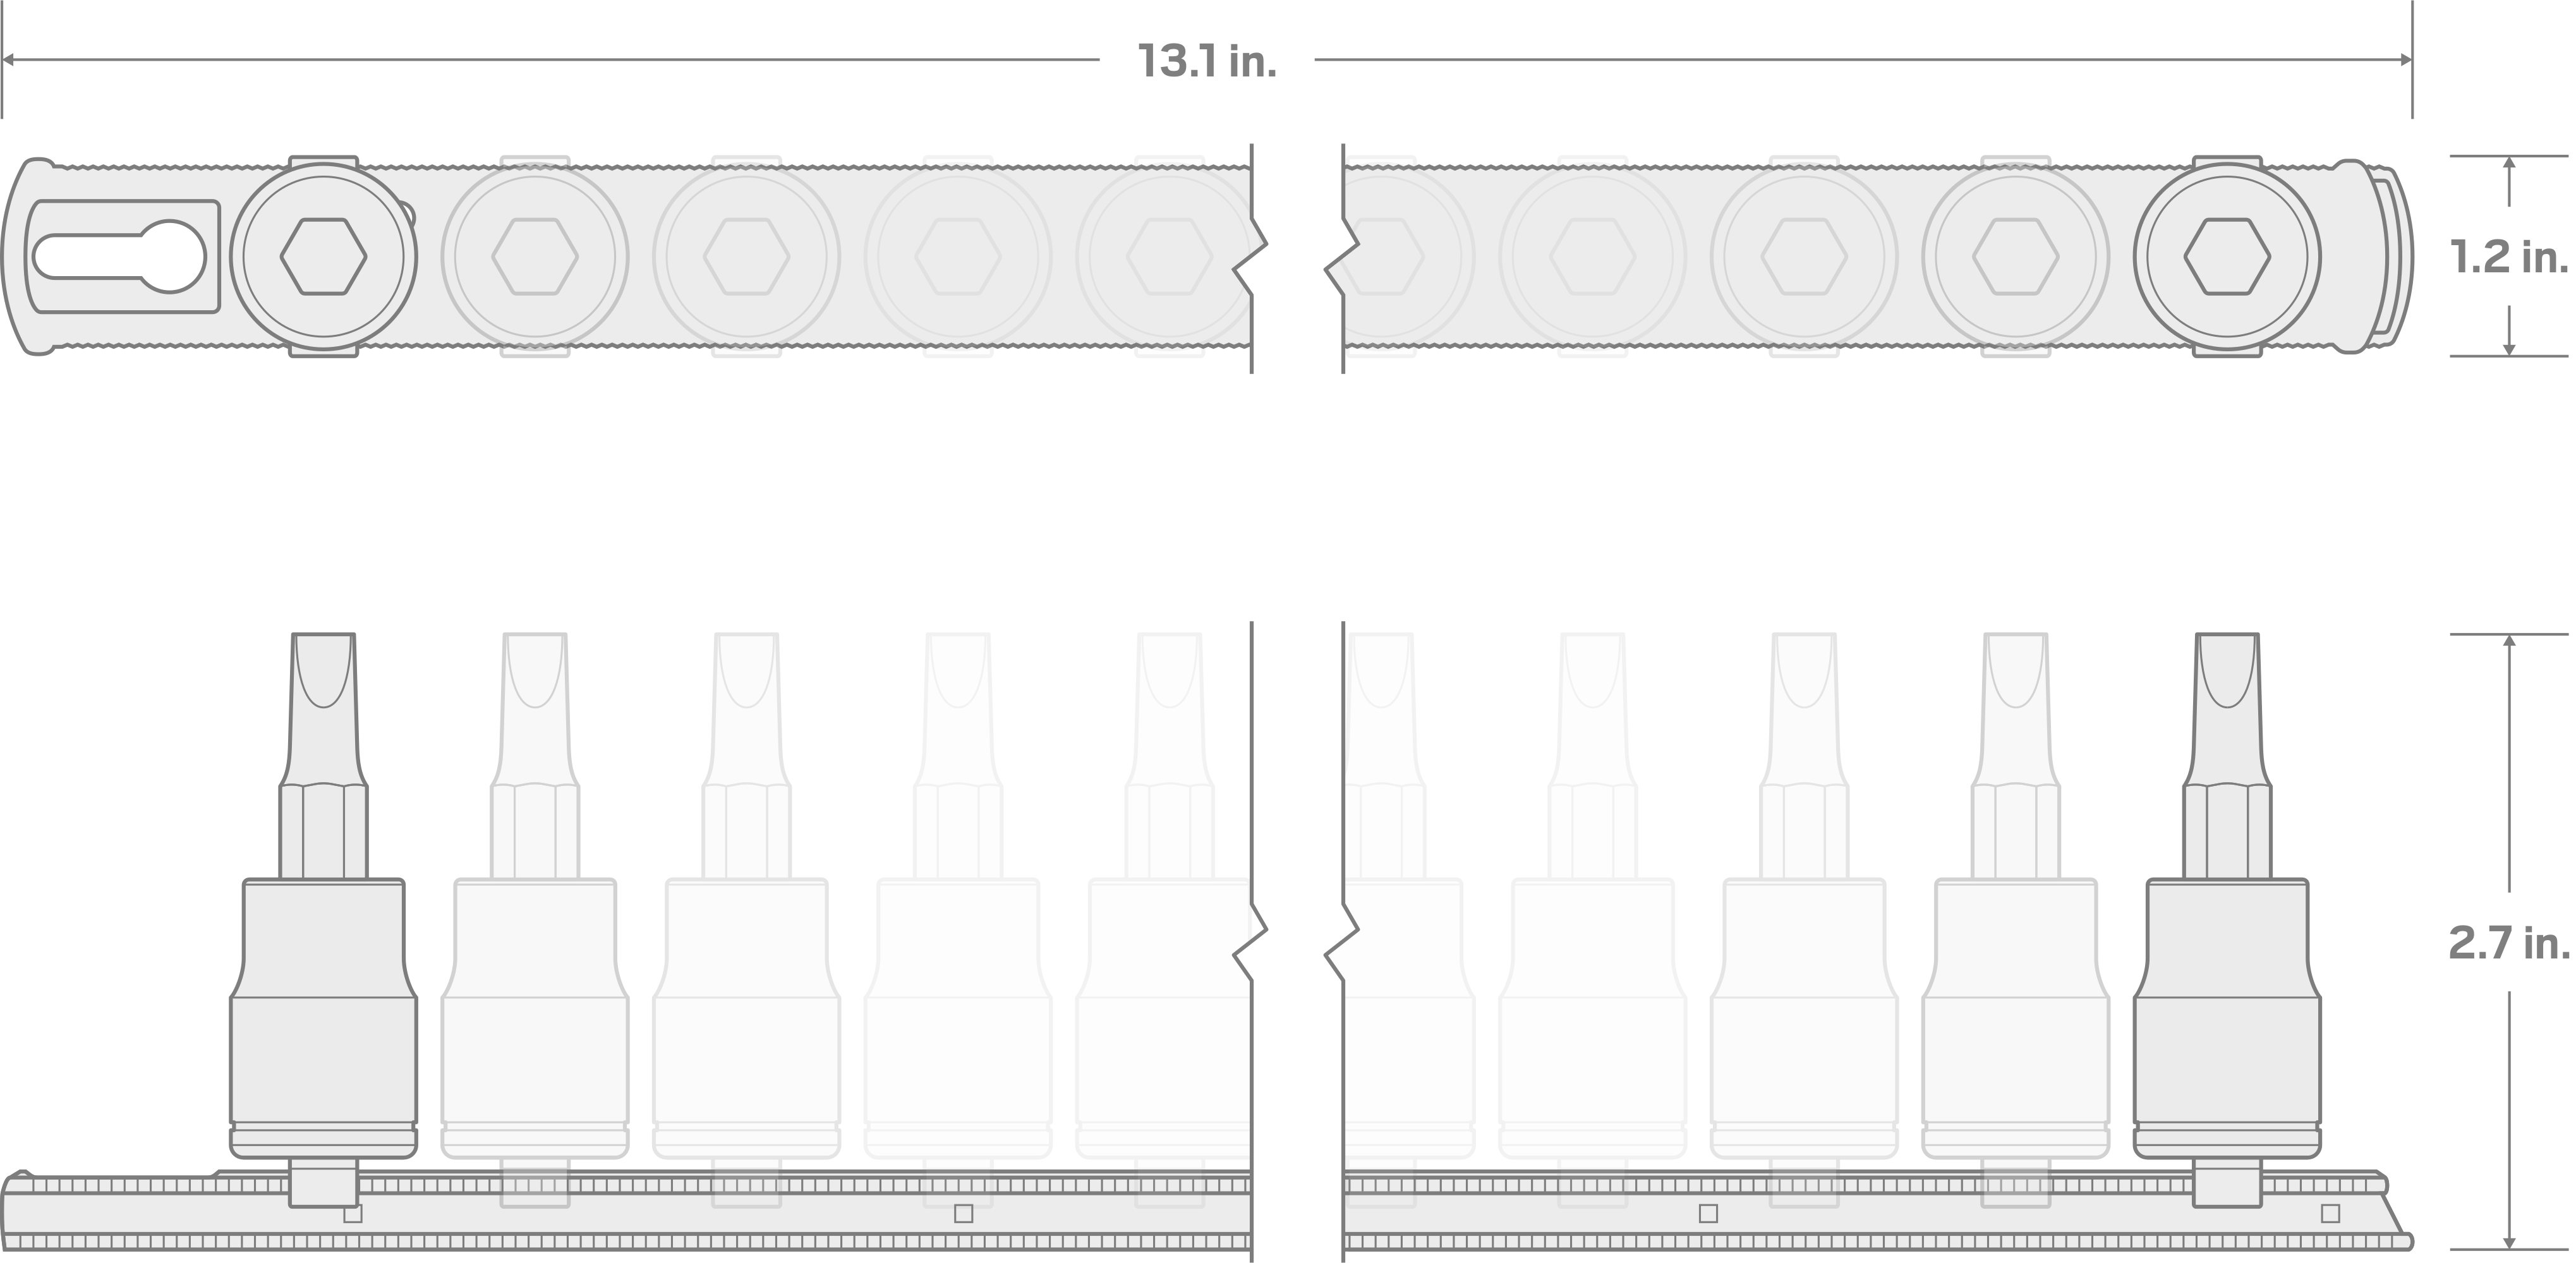 Specs for 1/2 Inch Drive Torx Bit Socket Set, 10-Piece (T20-T60) with Rails